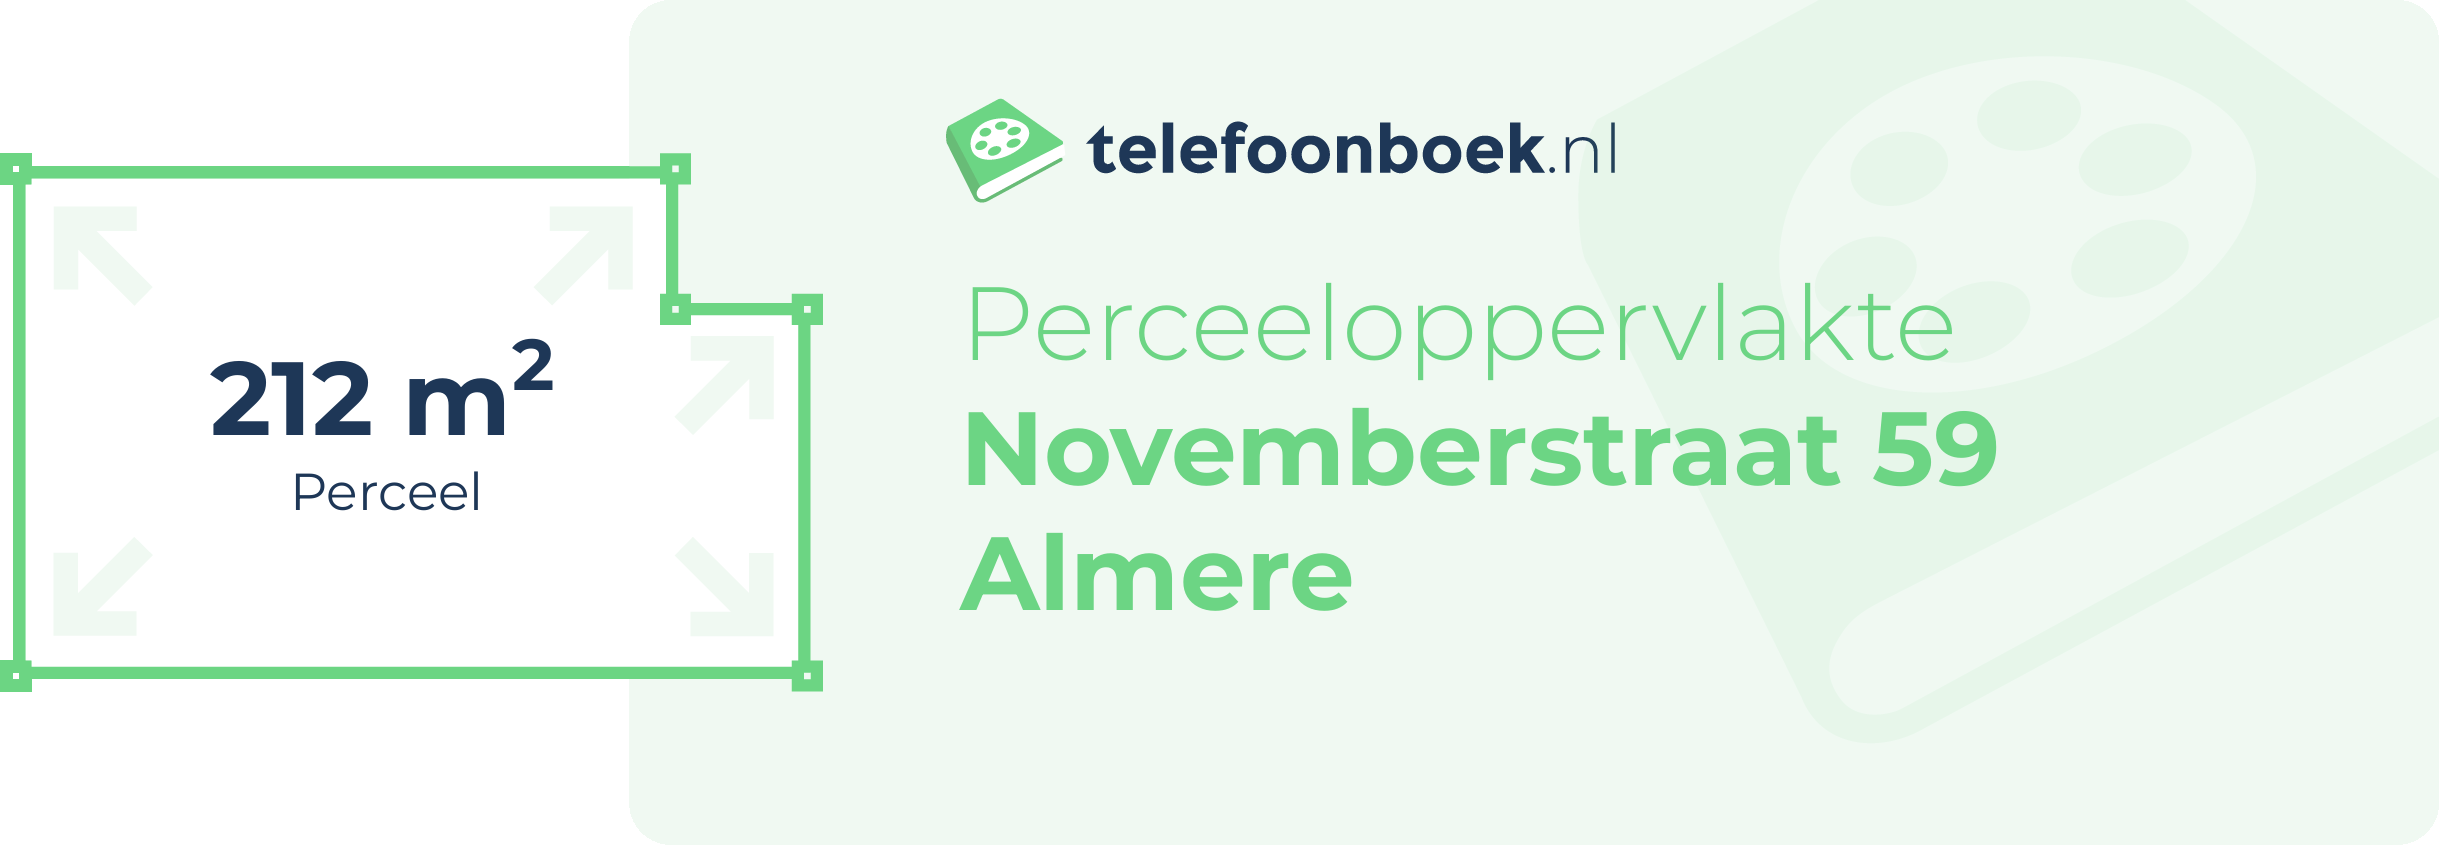 Perceeloppervlakte Novemberstraat 59 Almere